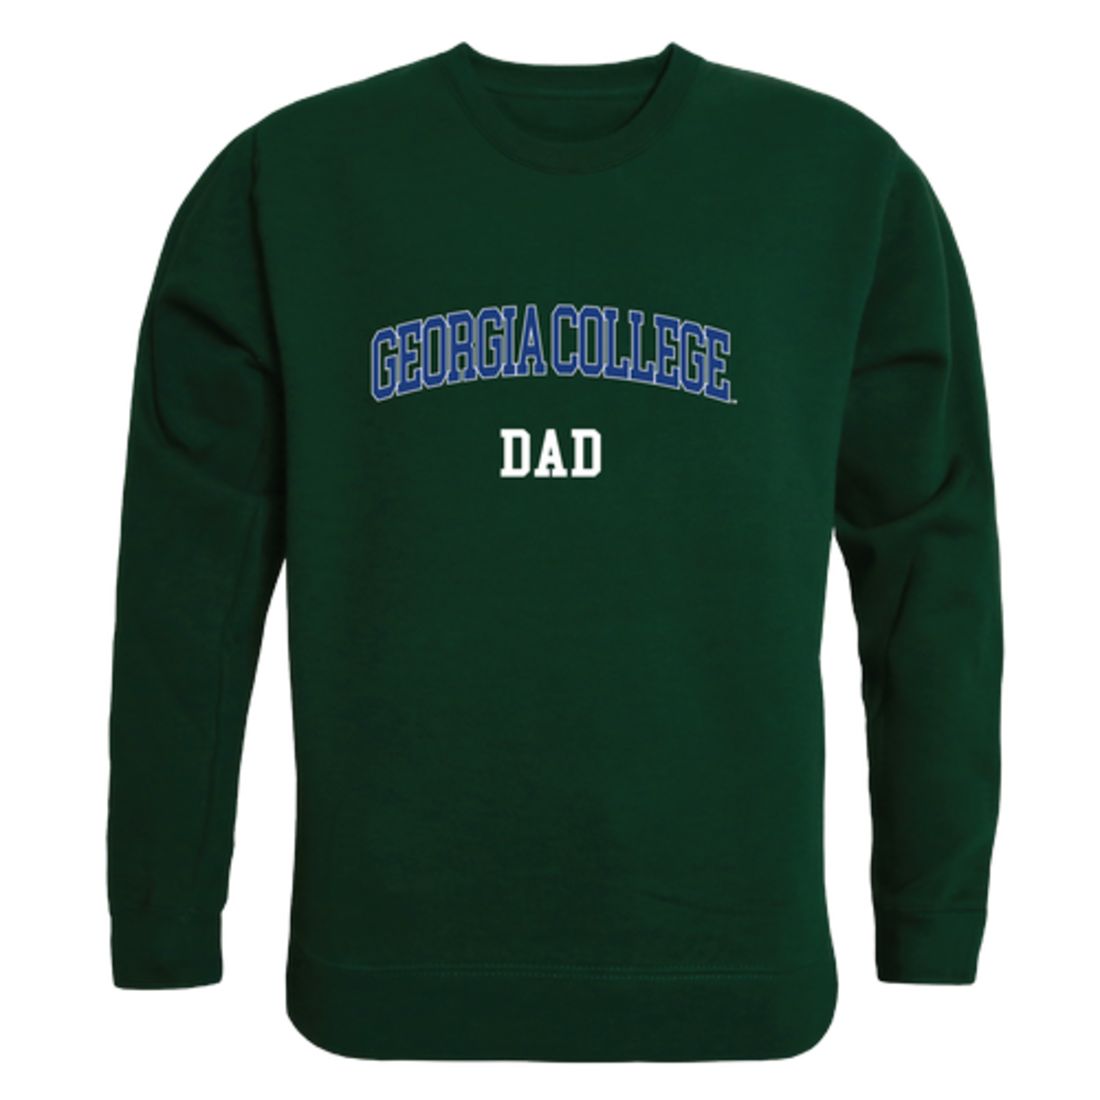 Georgia College and State University Bobcats Dad Fleece Crewneck Pullover Sweatshirt